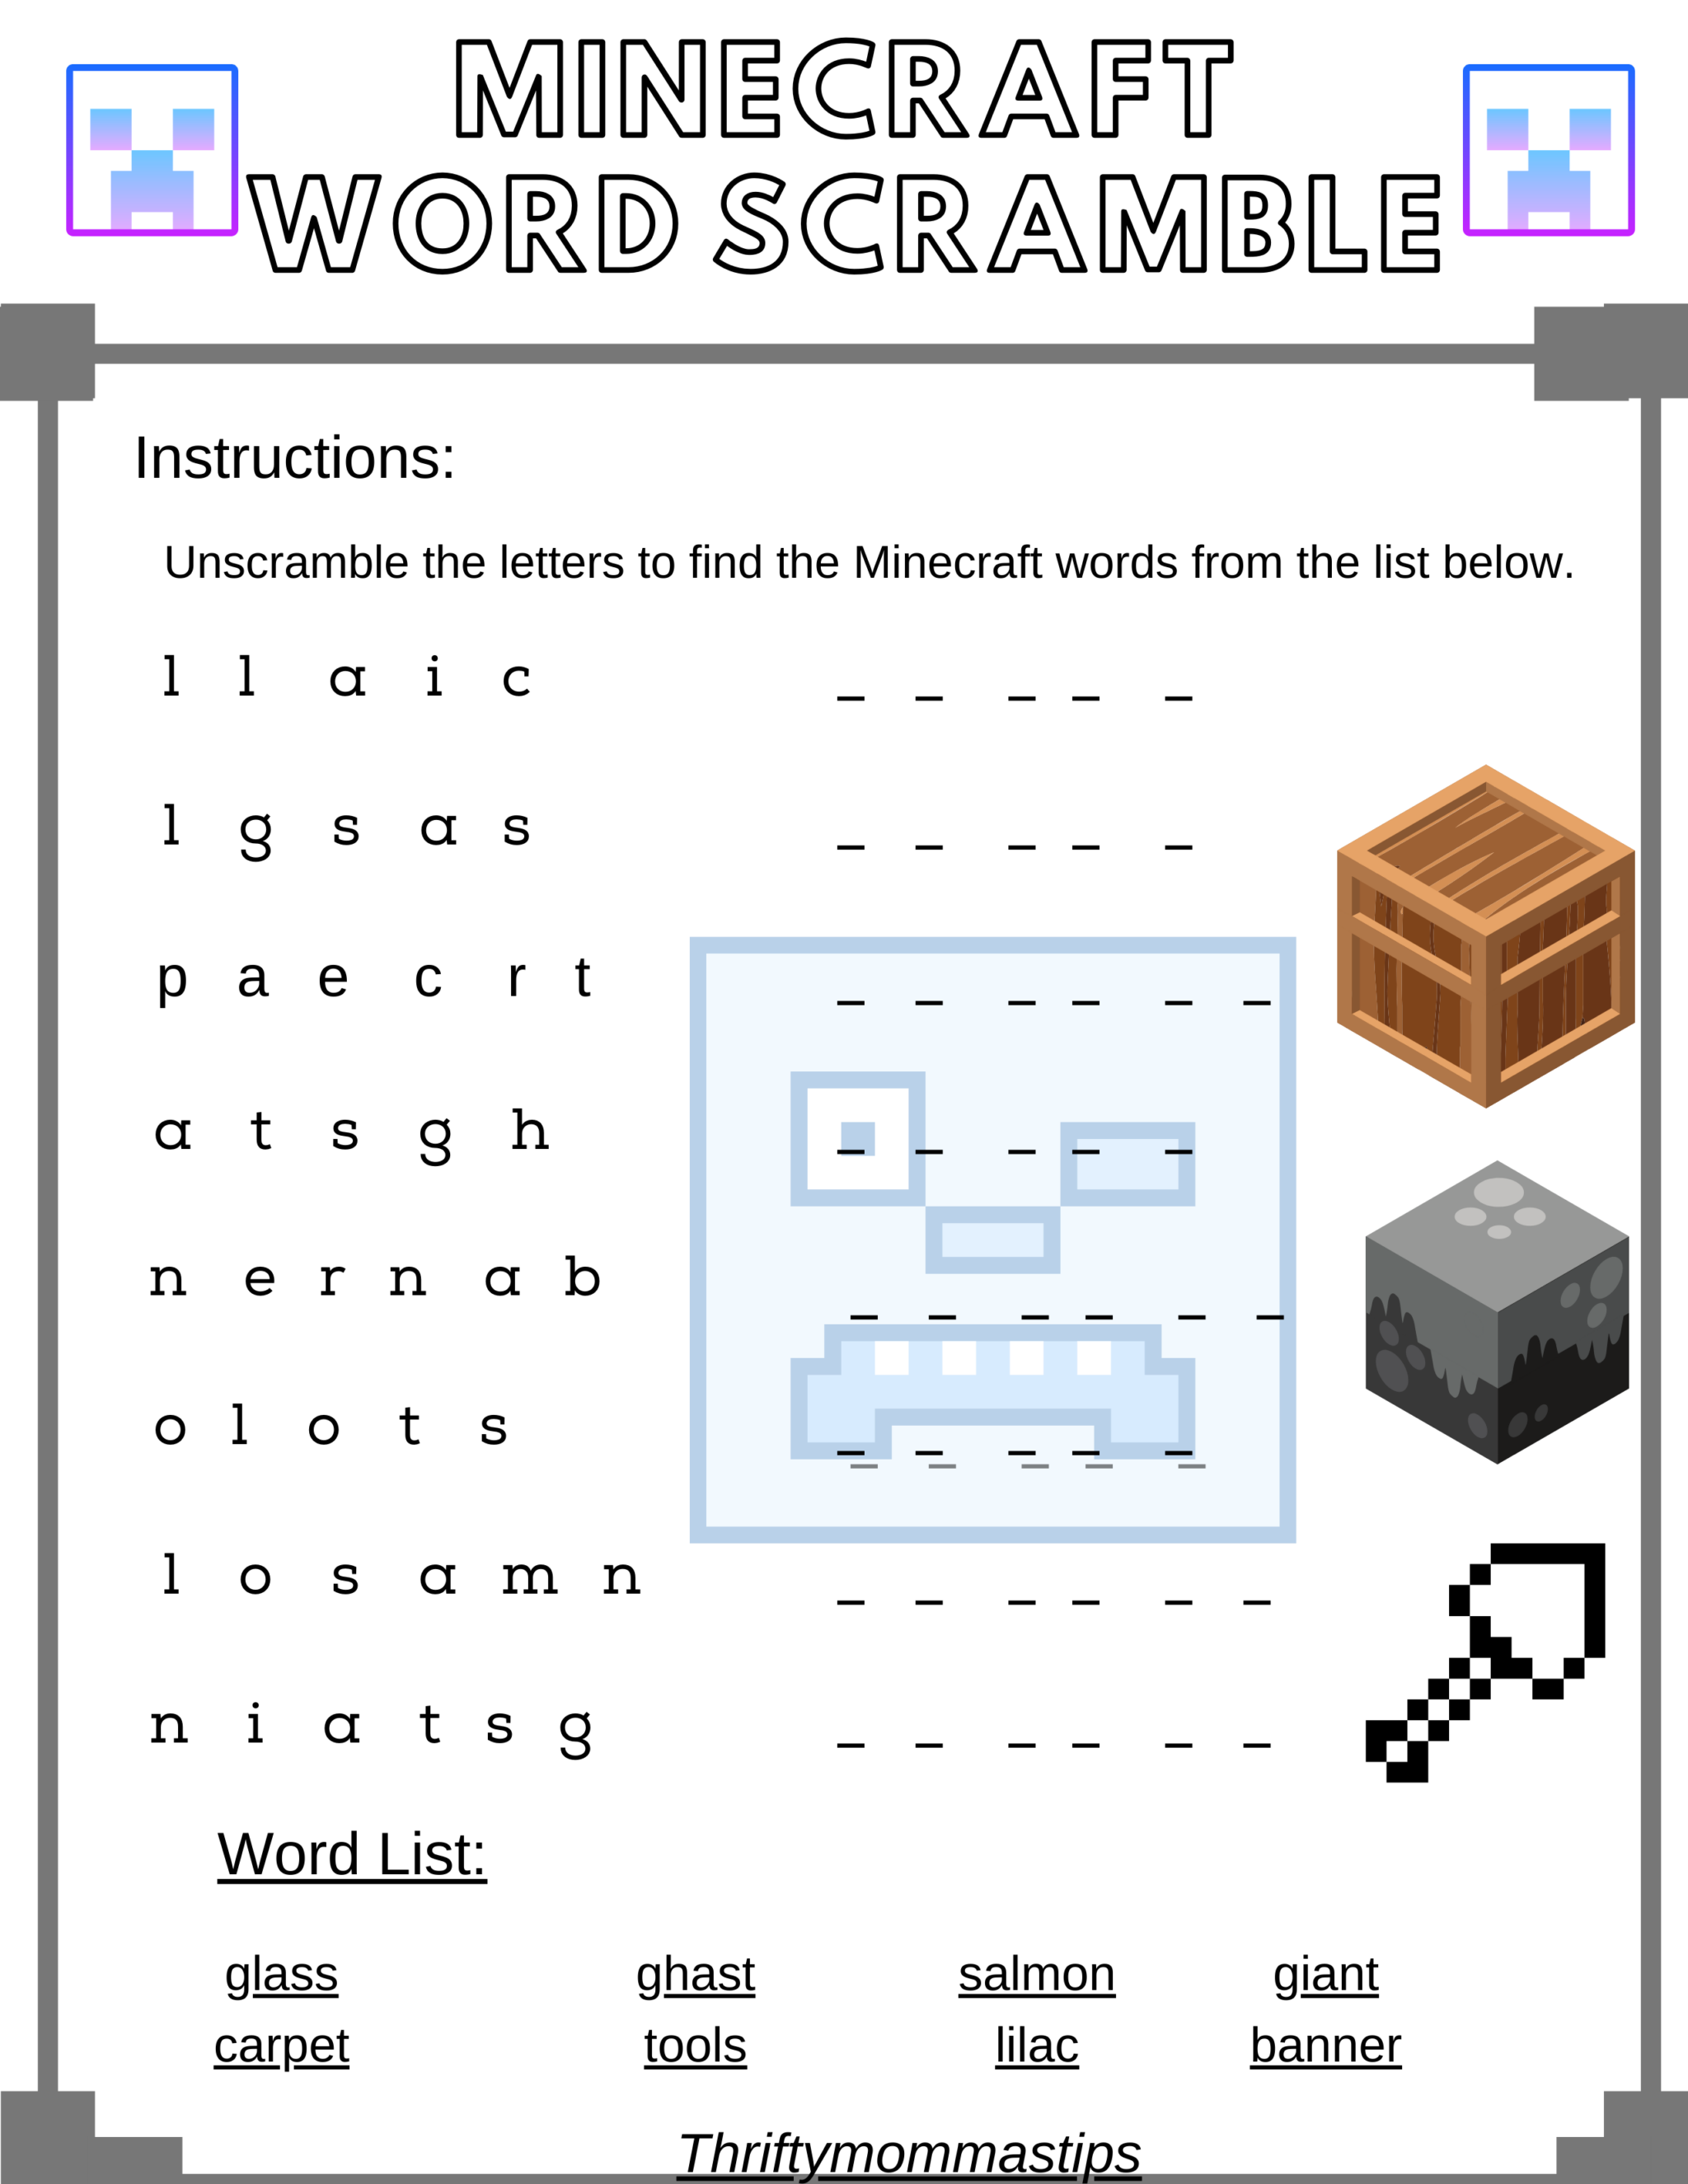 Minecraft_word_scramble